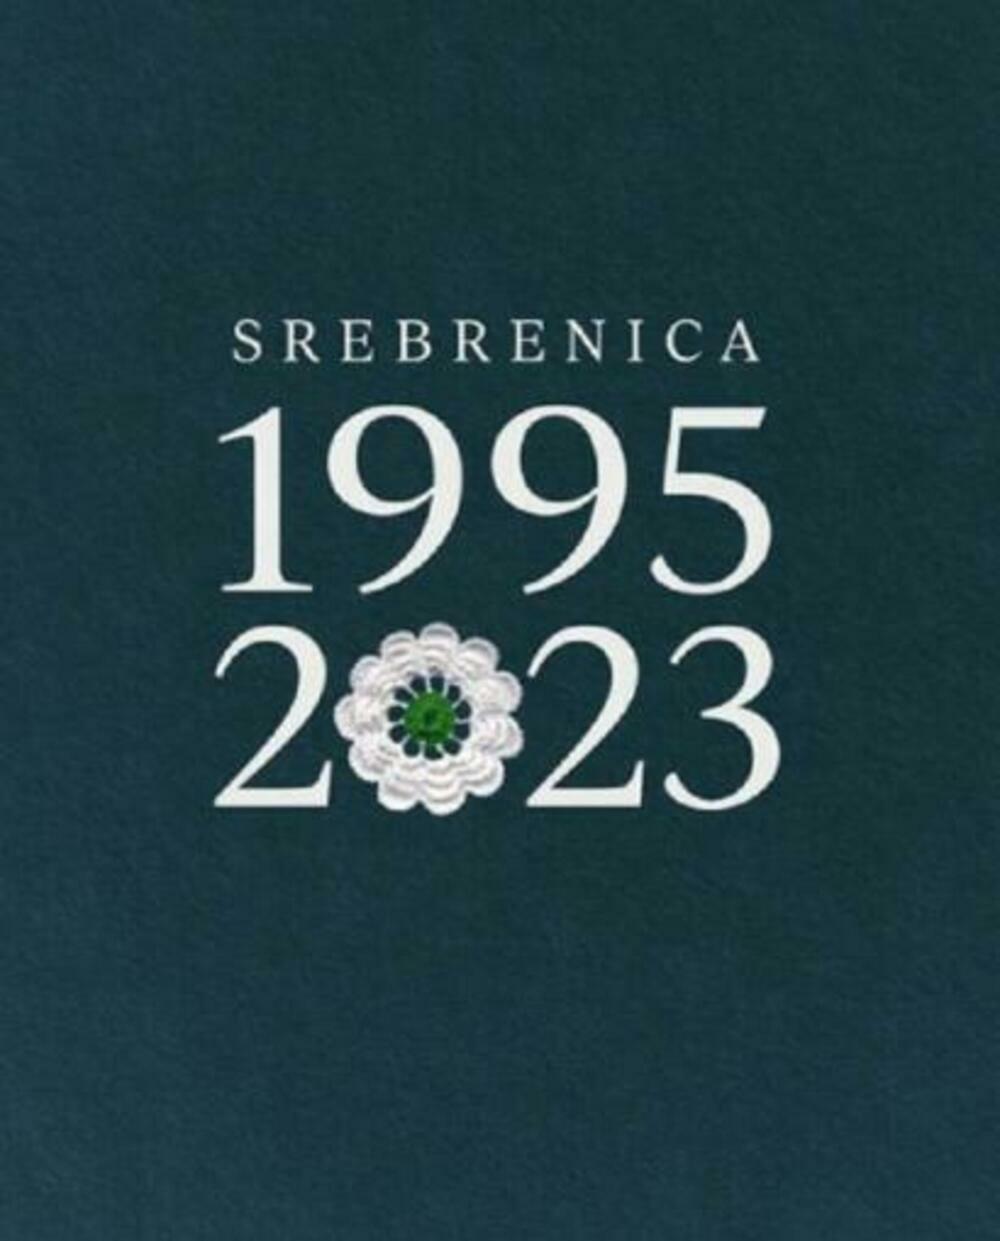 Dino Merlin odao počast žrtvama zločina u Srebrenici.